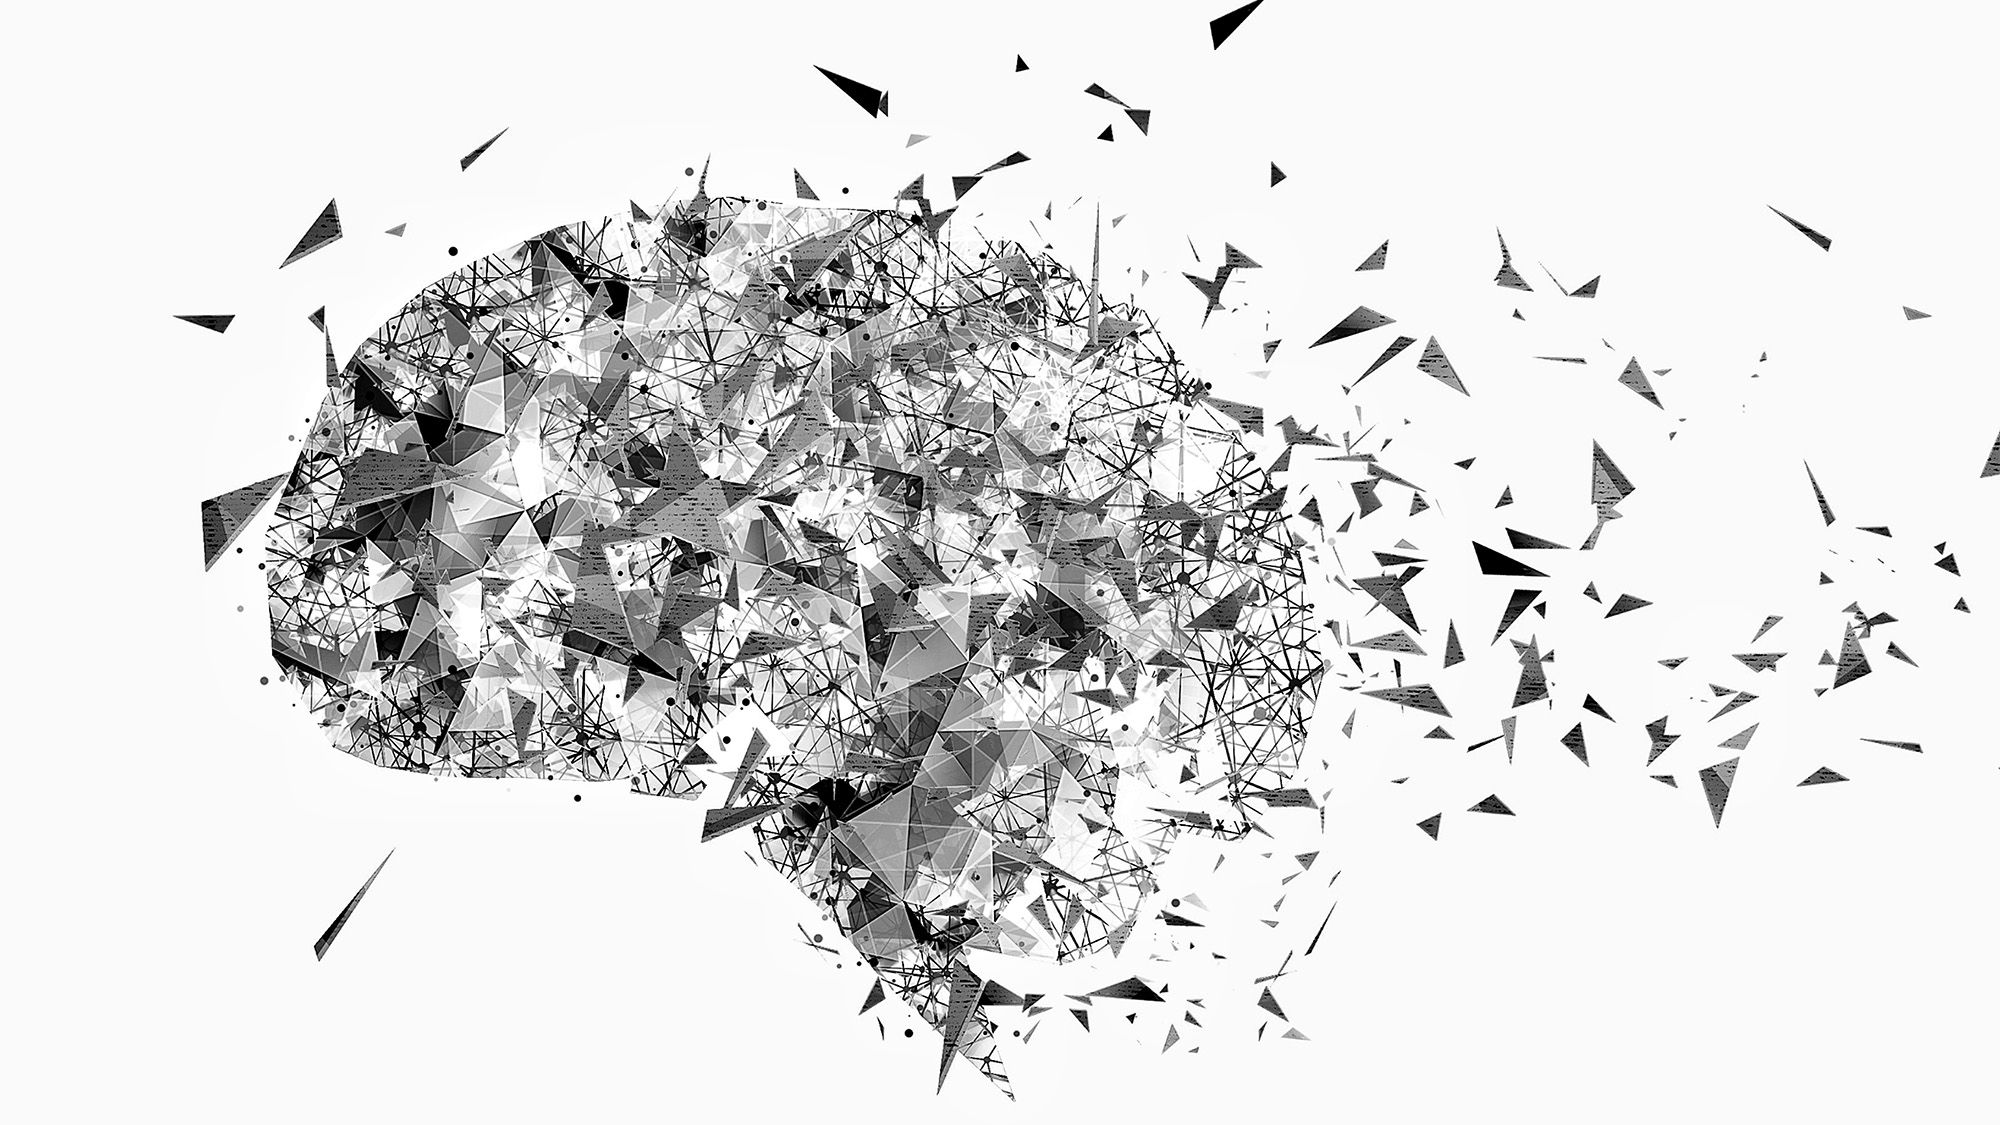 An illustration of a brain disintegrating under an impact